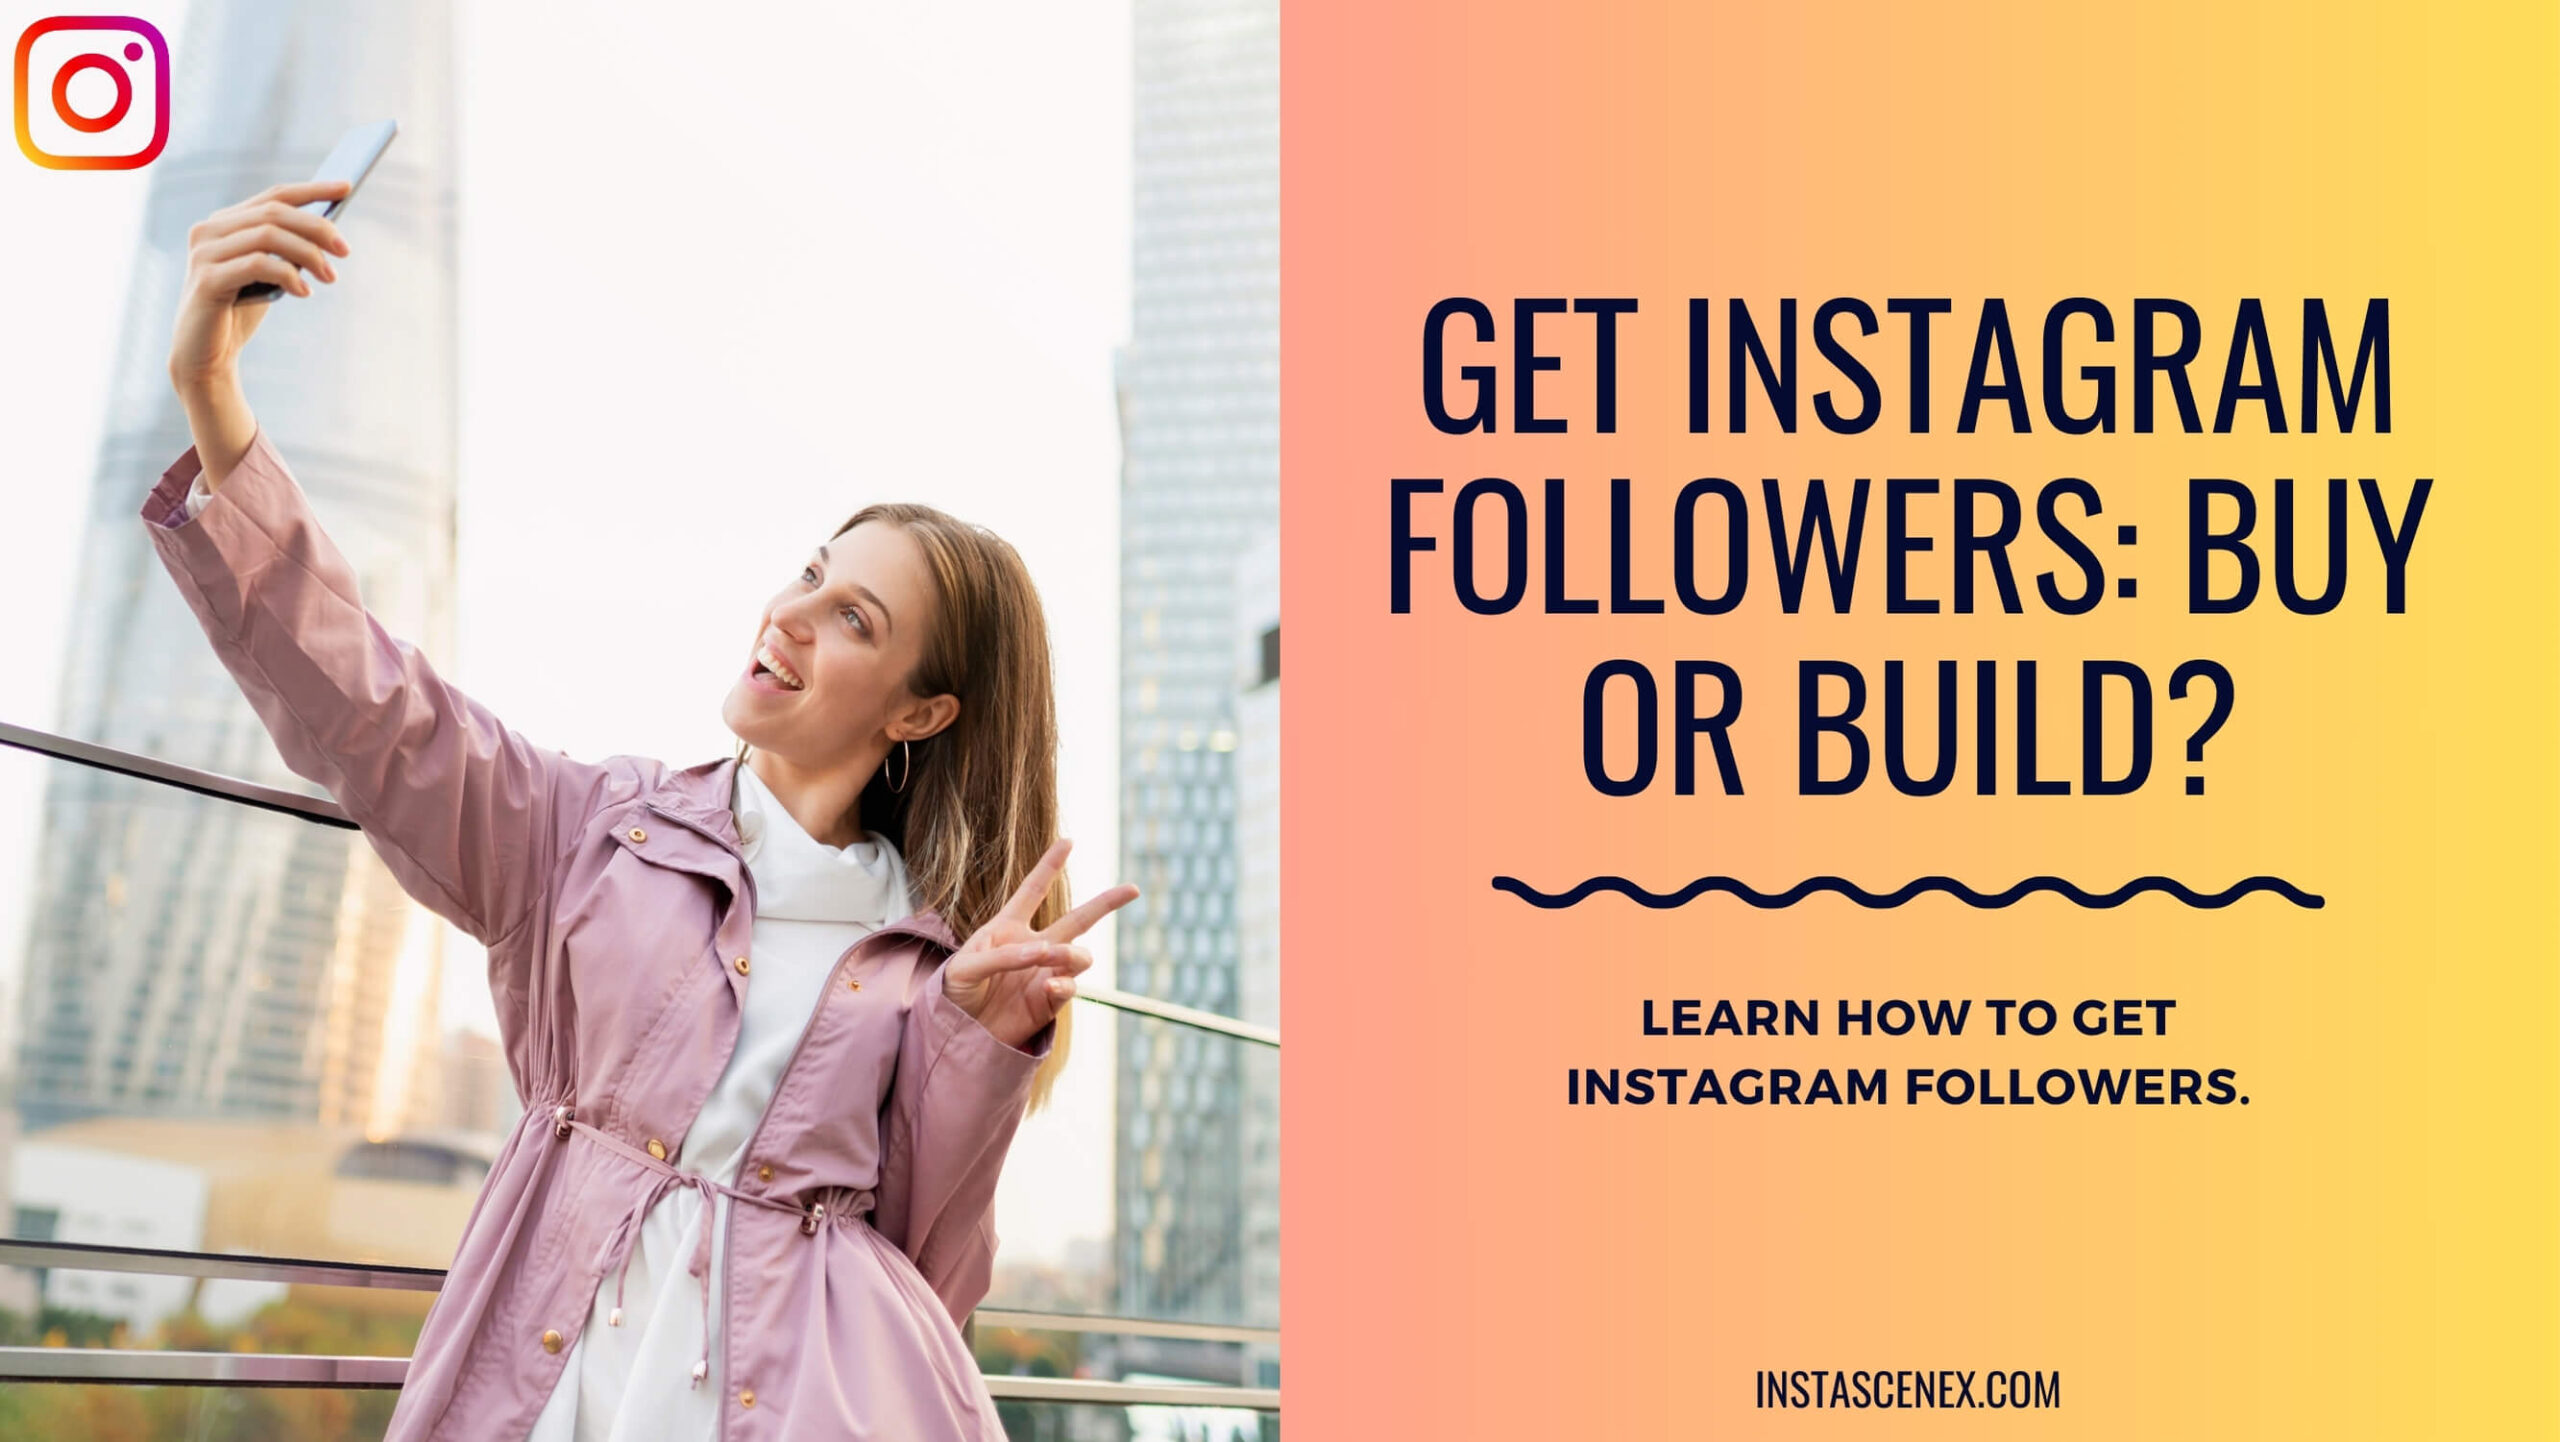 Get Instagram Followers: Buy or Build?